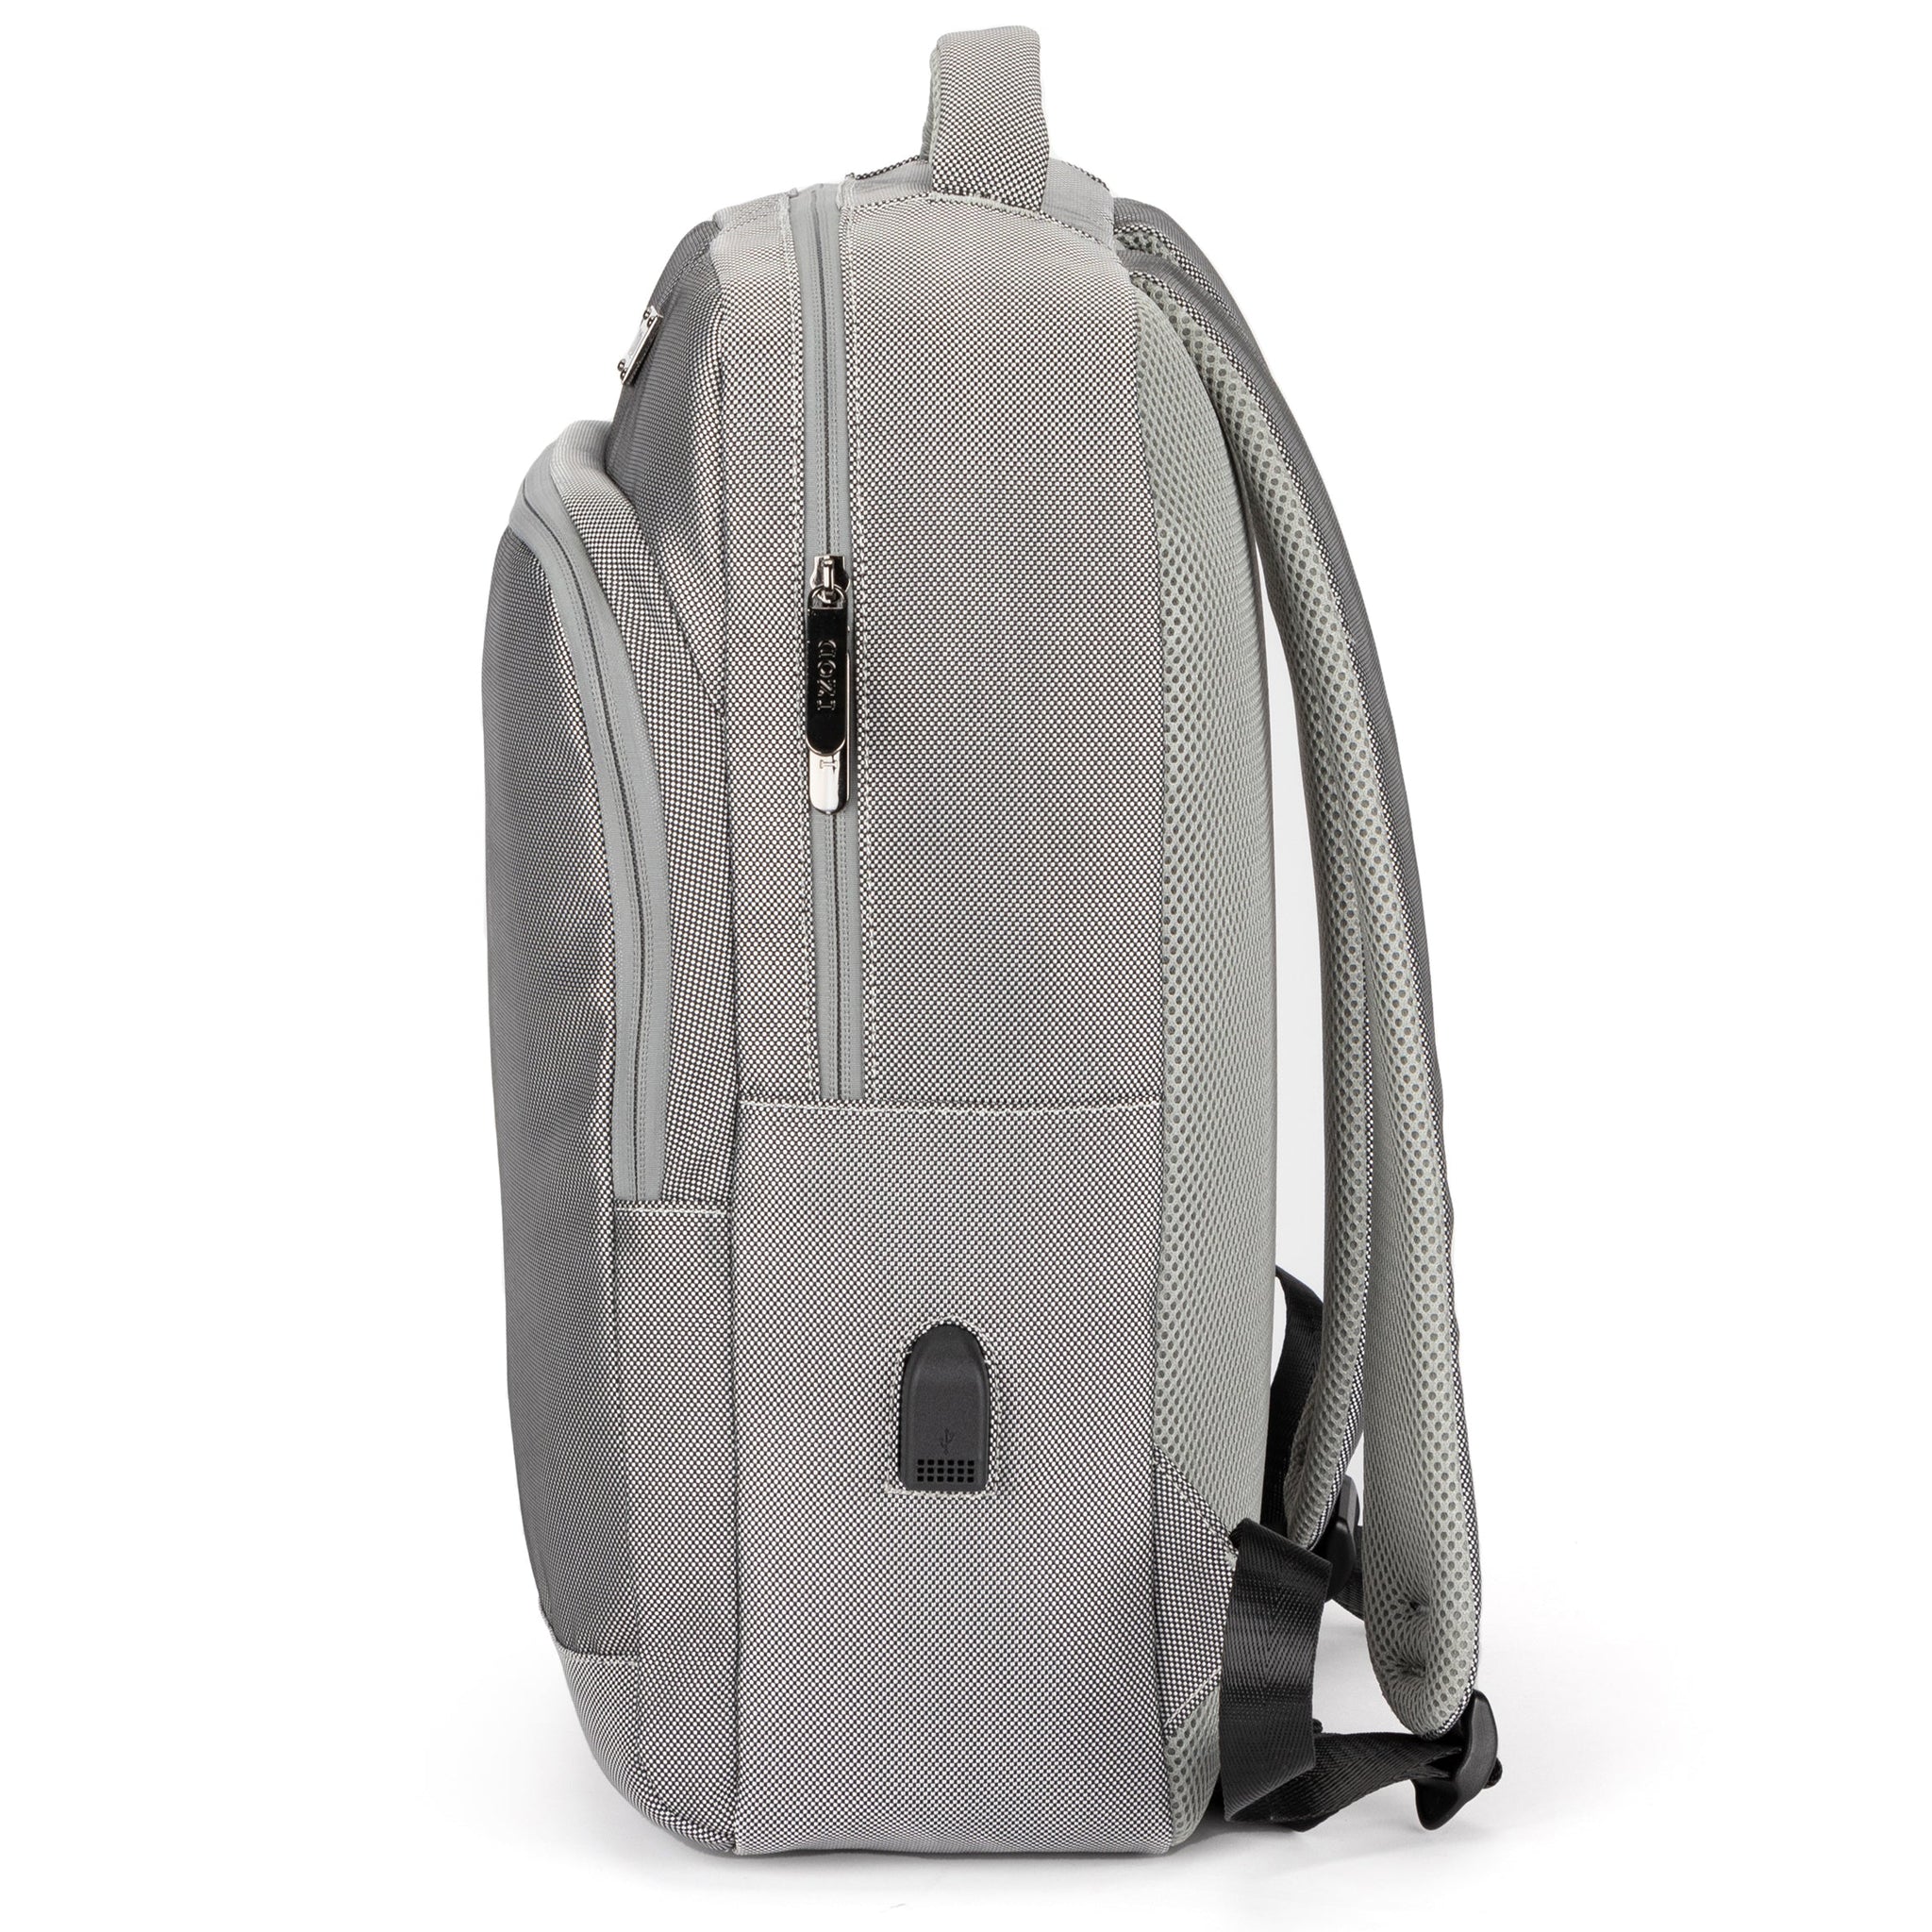 IZOD ALCI Slim 15.6" Laptop Backpack with USB Charging Port